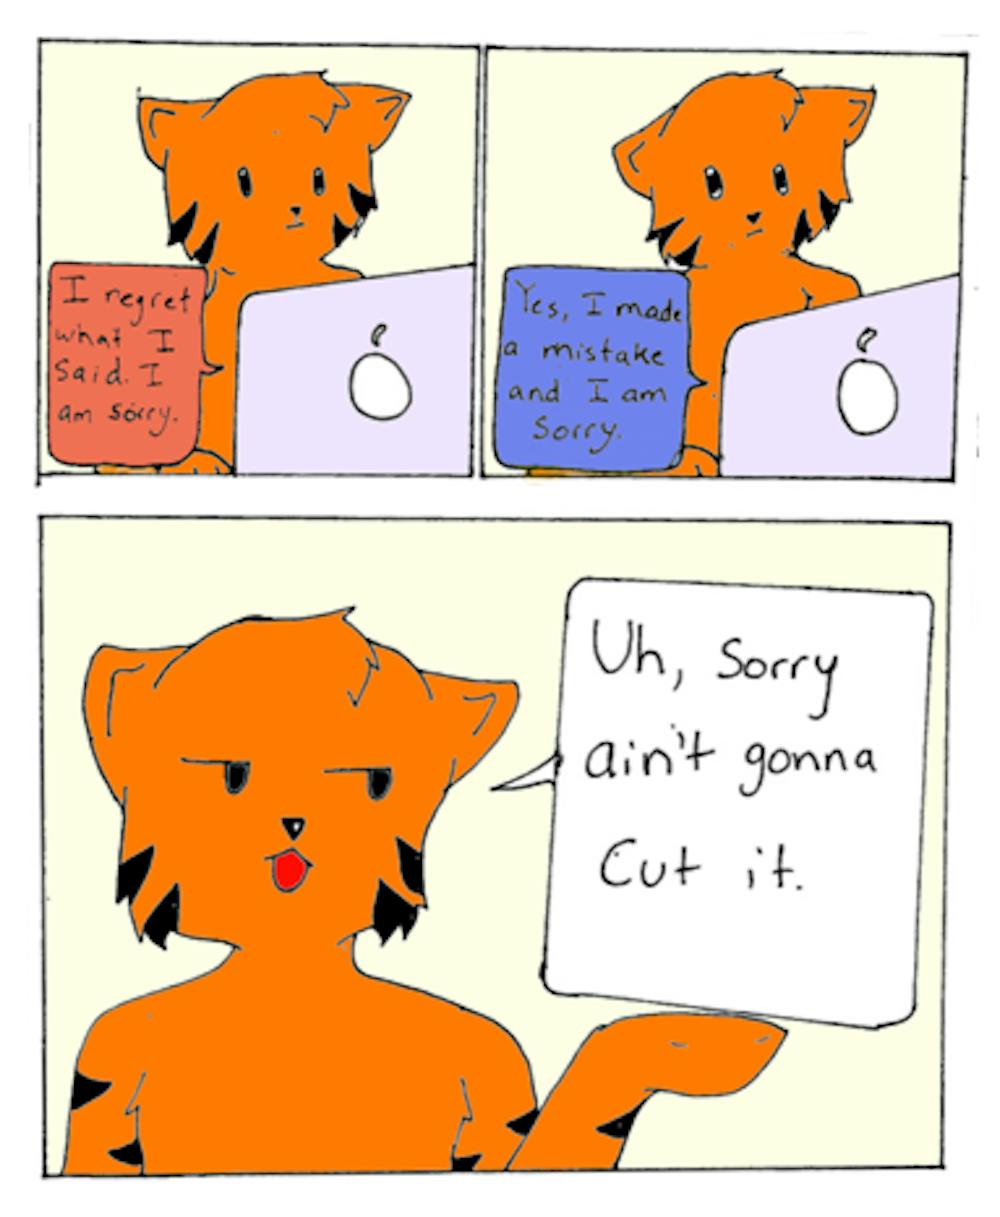 Sorry ain't gonna cut it